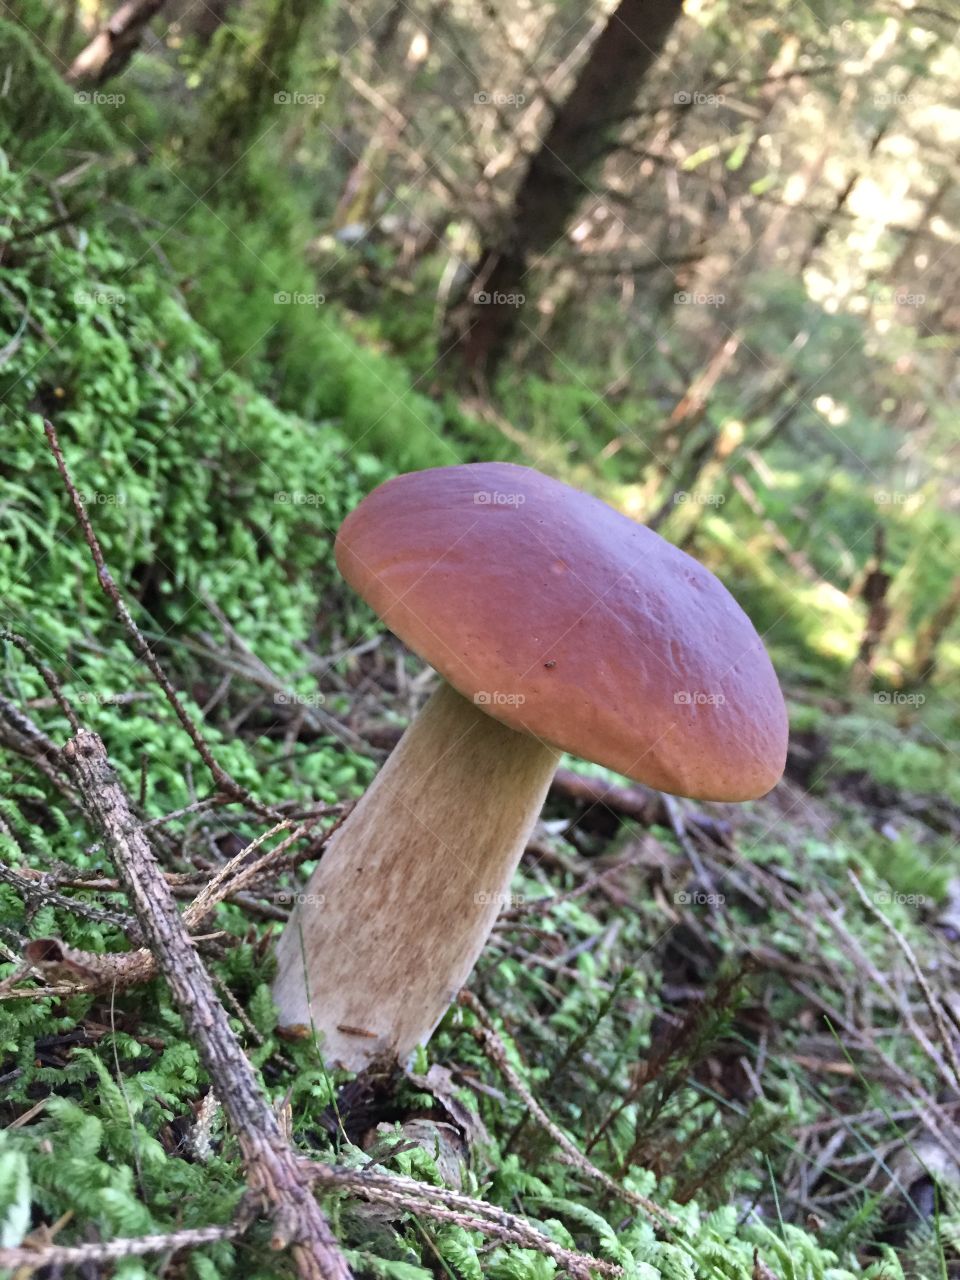 Mushrooms - boletus edulis